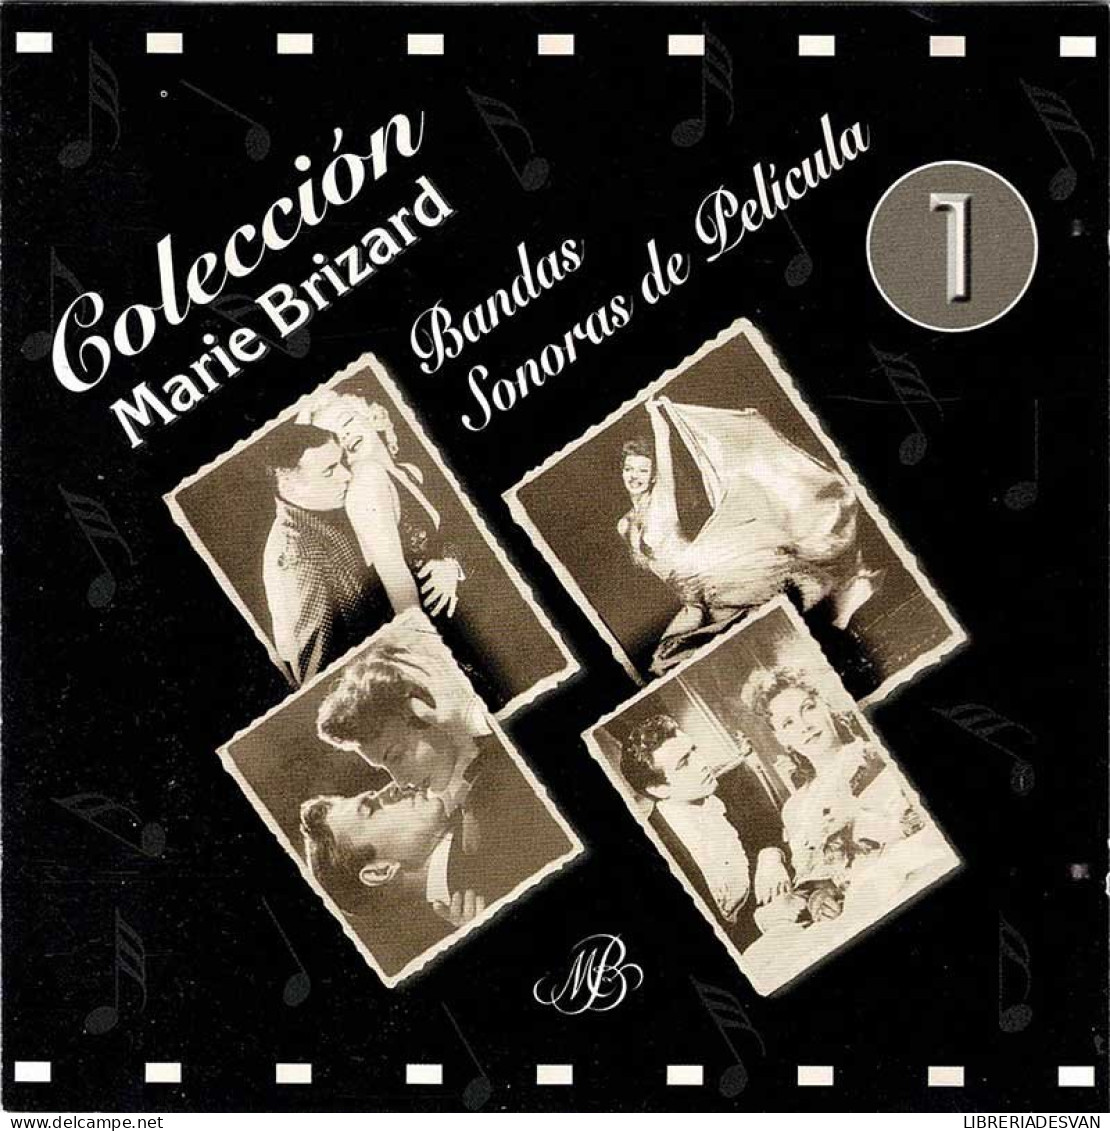 Colección Marie Brizard. Bandas Sonoras De Película Vol. 1. CD - Musica Di Film